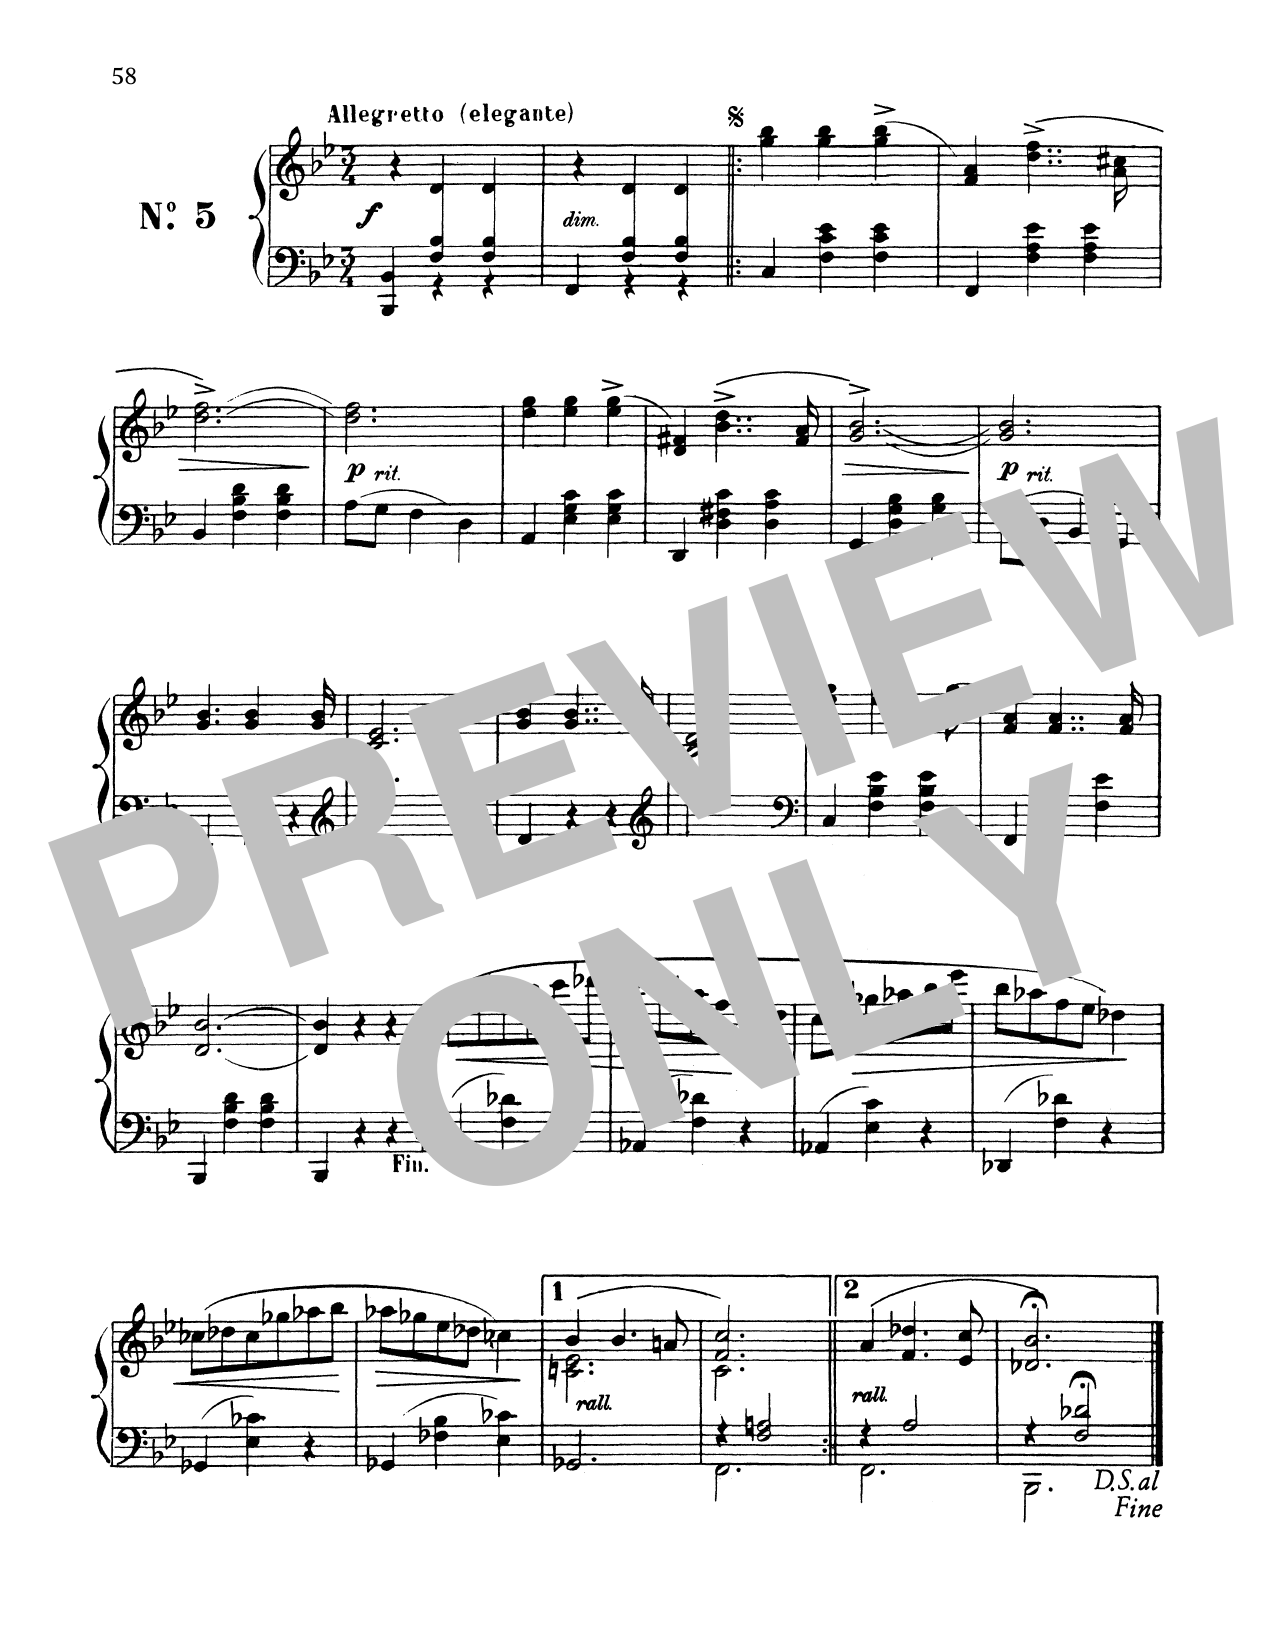 Enrique Granados Allegretto (Elegante) Sheet Music Notes & Chords for Piano - Download or Print PDF